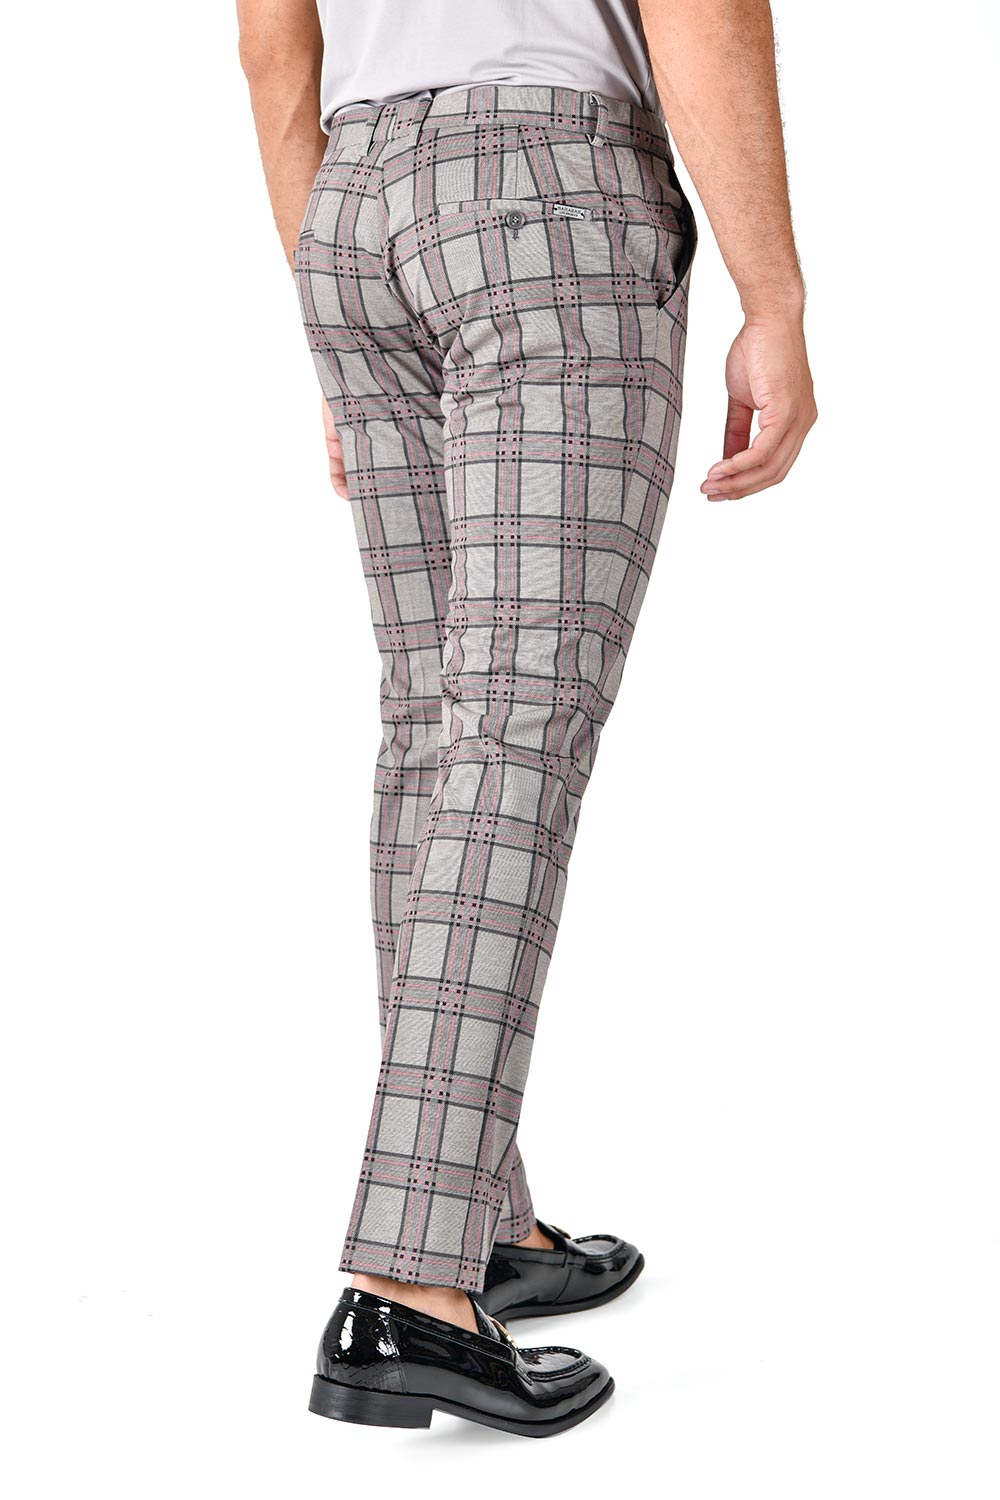 BARABAS men's checkered plaid light grey chino dress pants CP130 pink